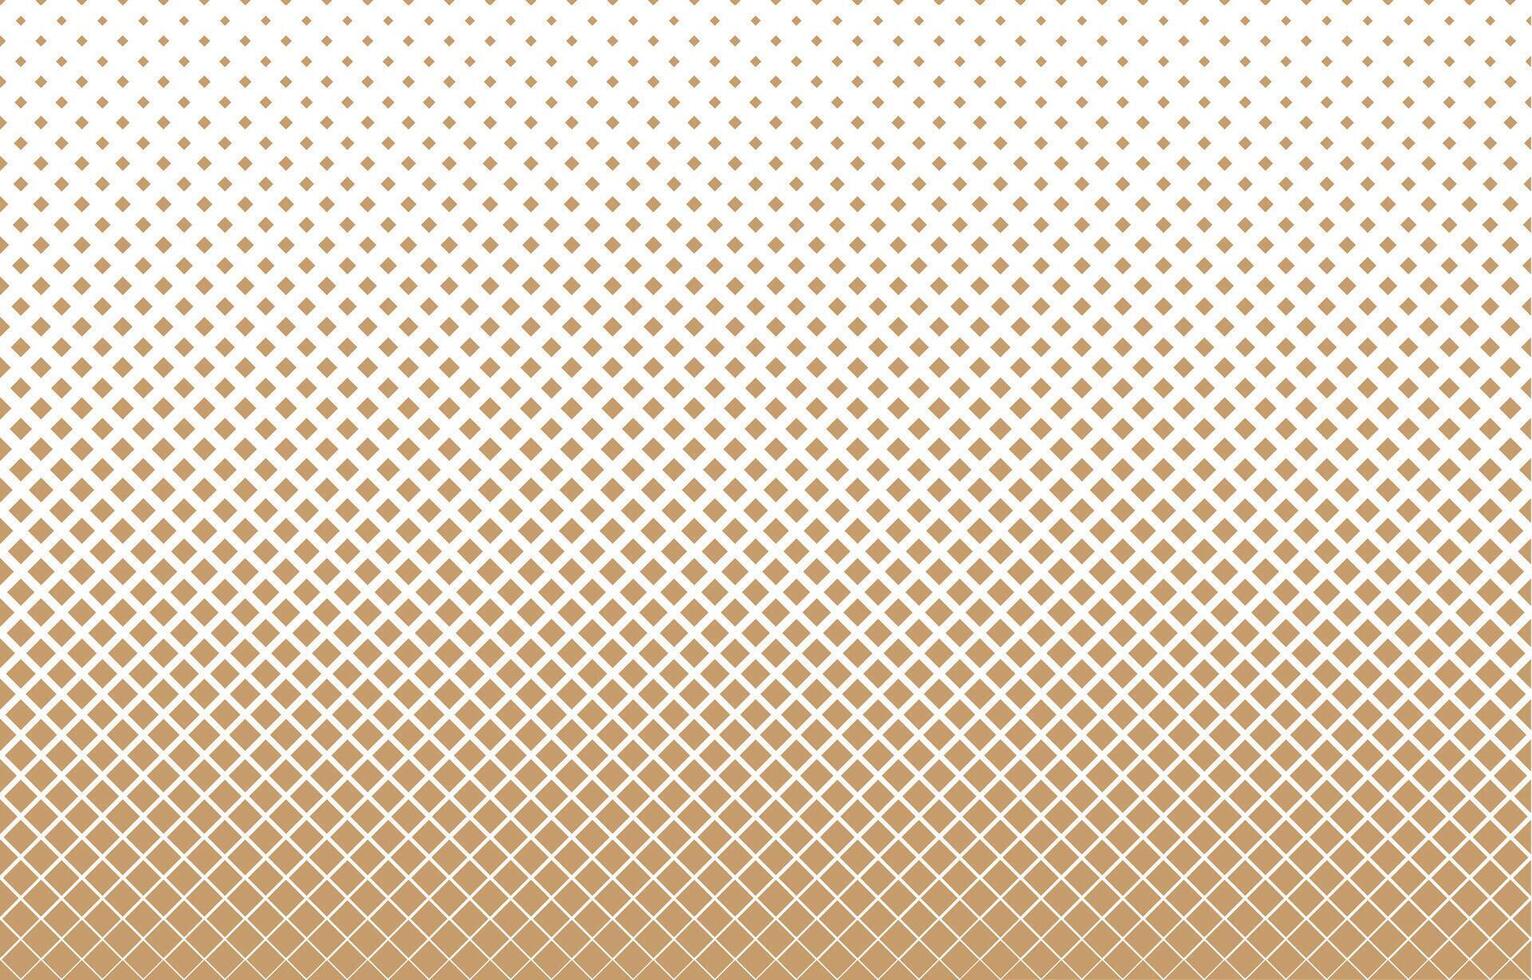 goud pleinen in halftone patroon naadloos meetkundig achtergrond. vector